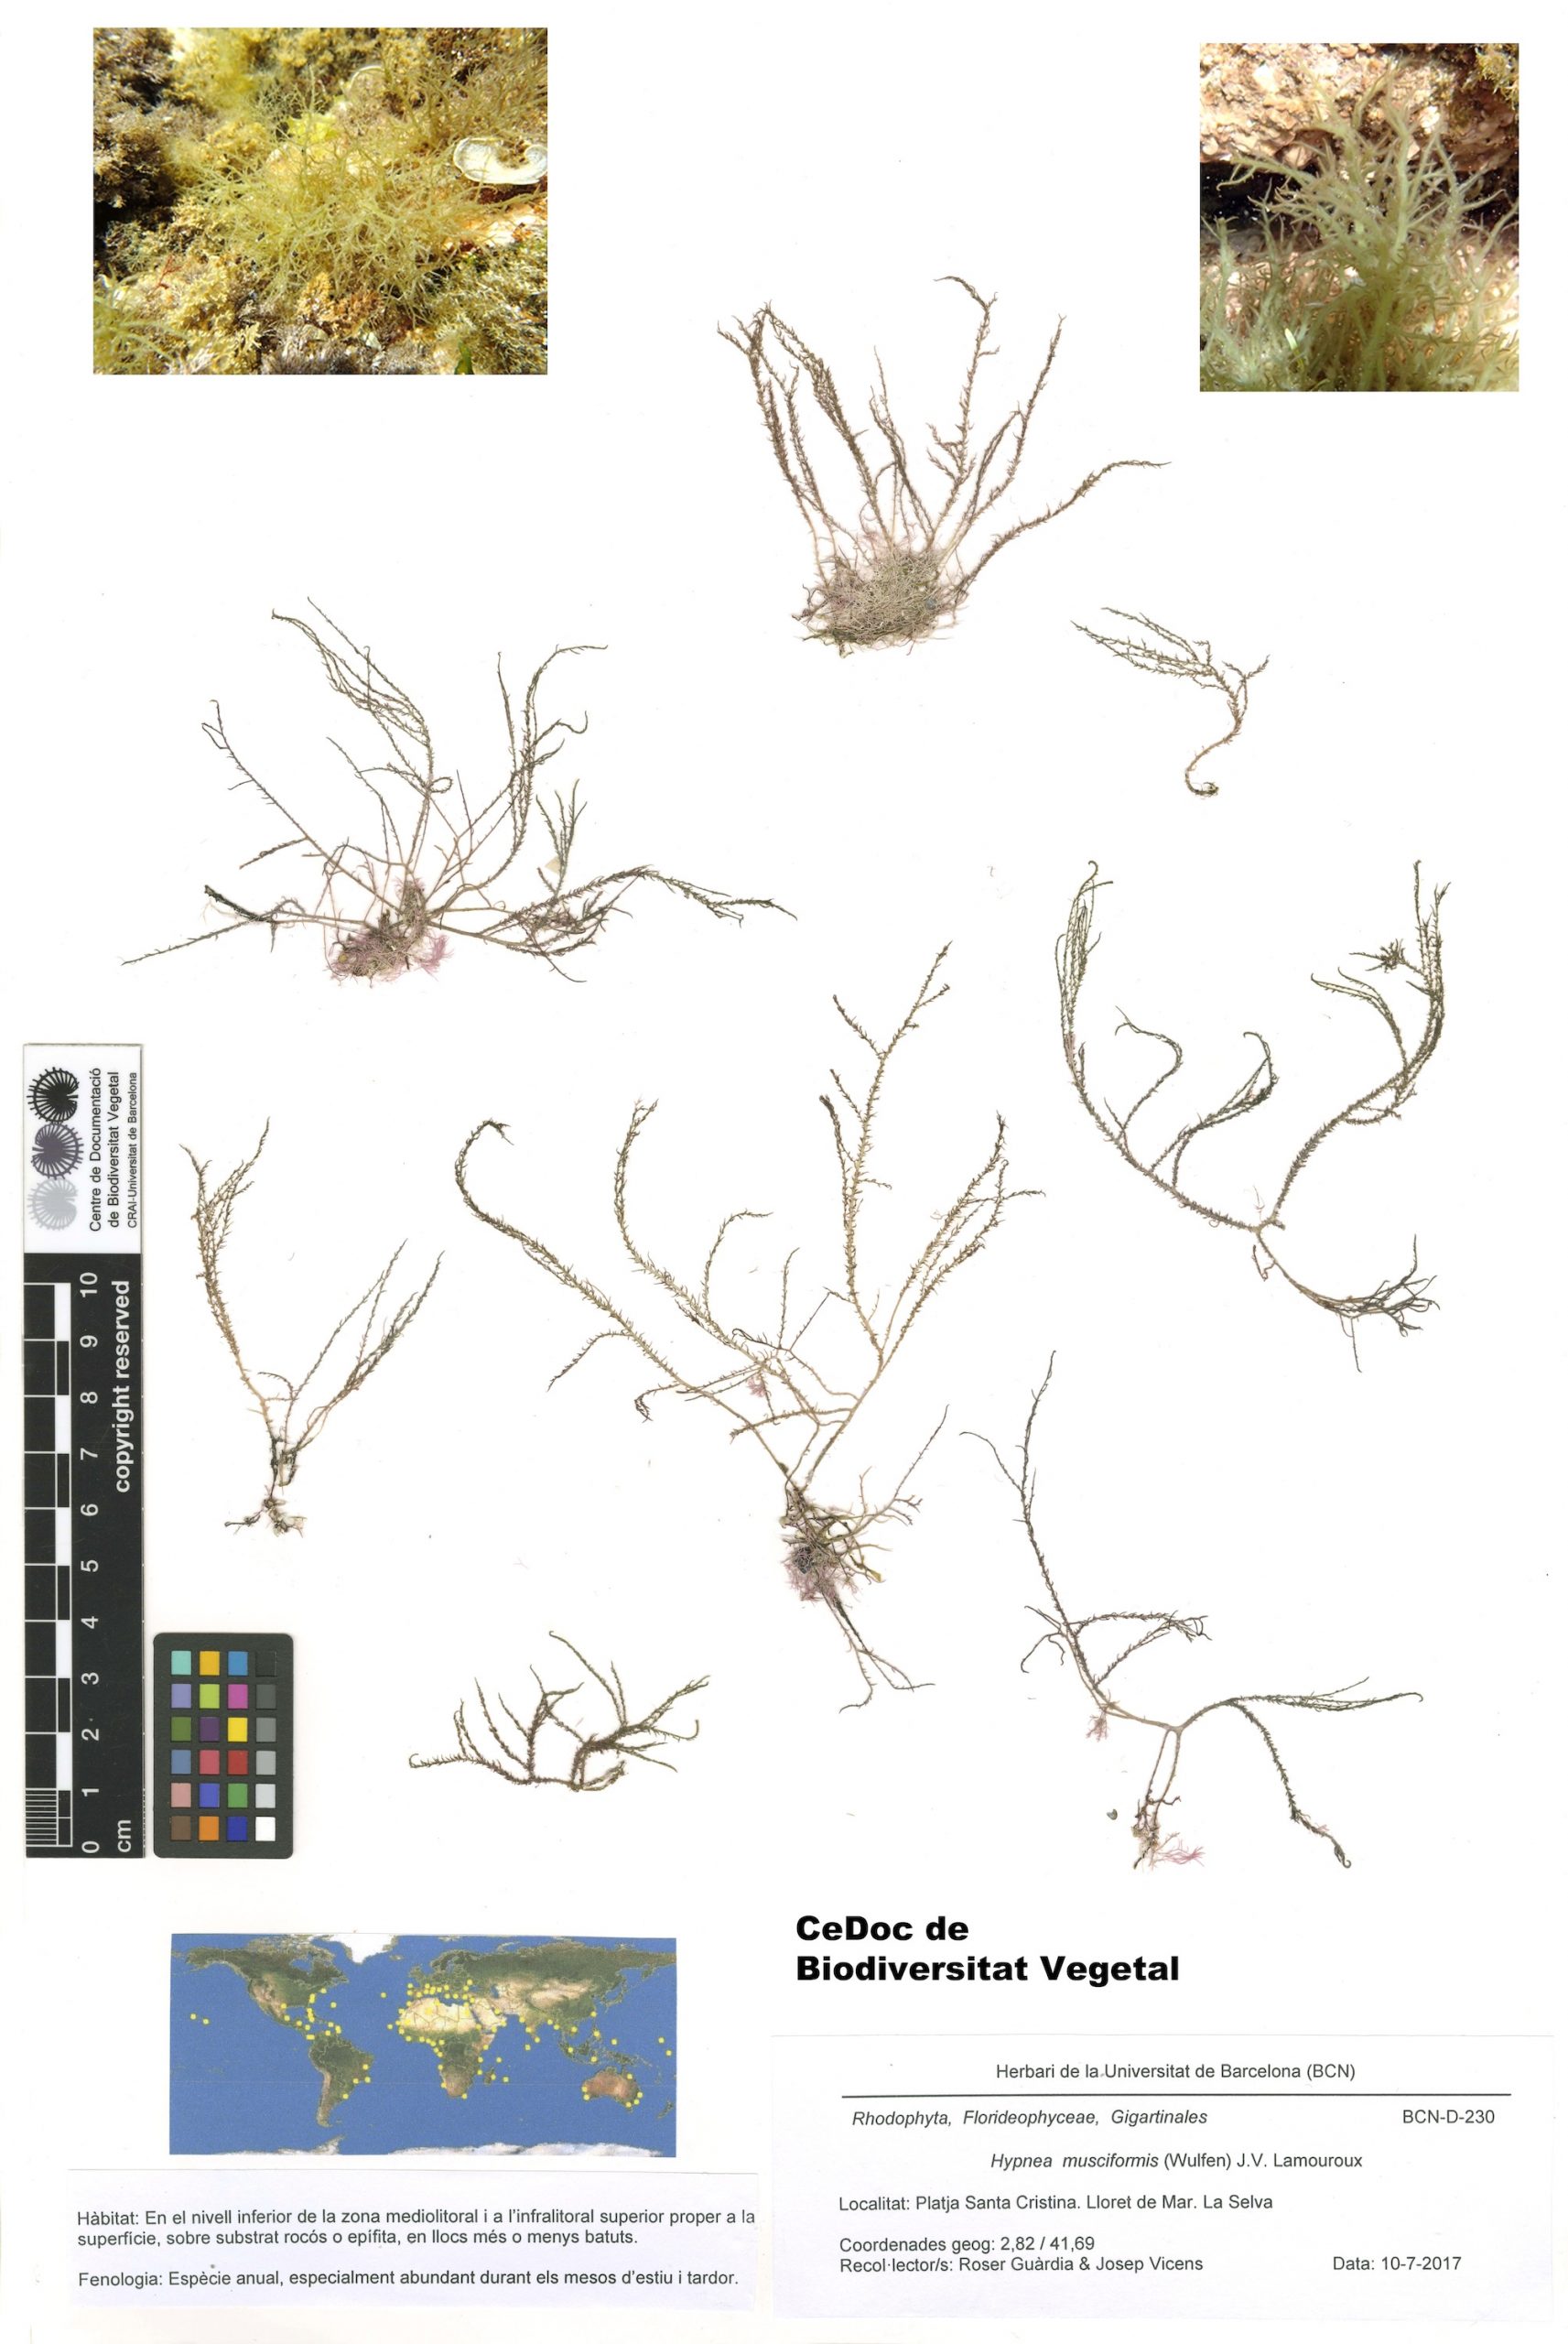 Hypnea musciformis (Wulfen) J.V. Lamouroux